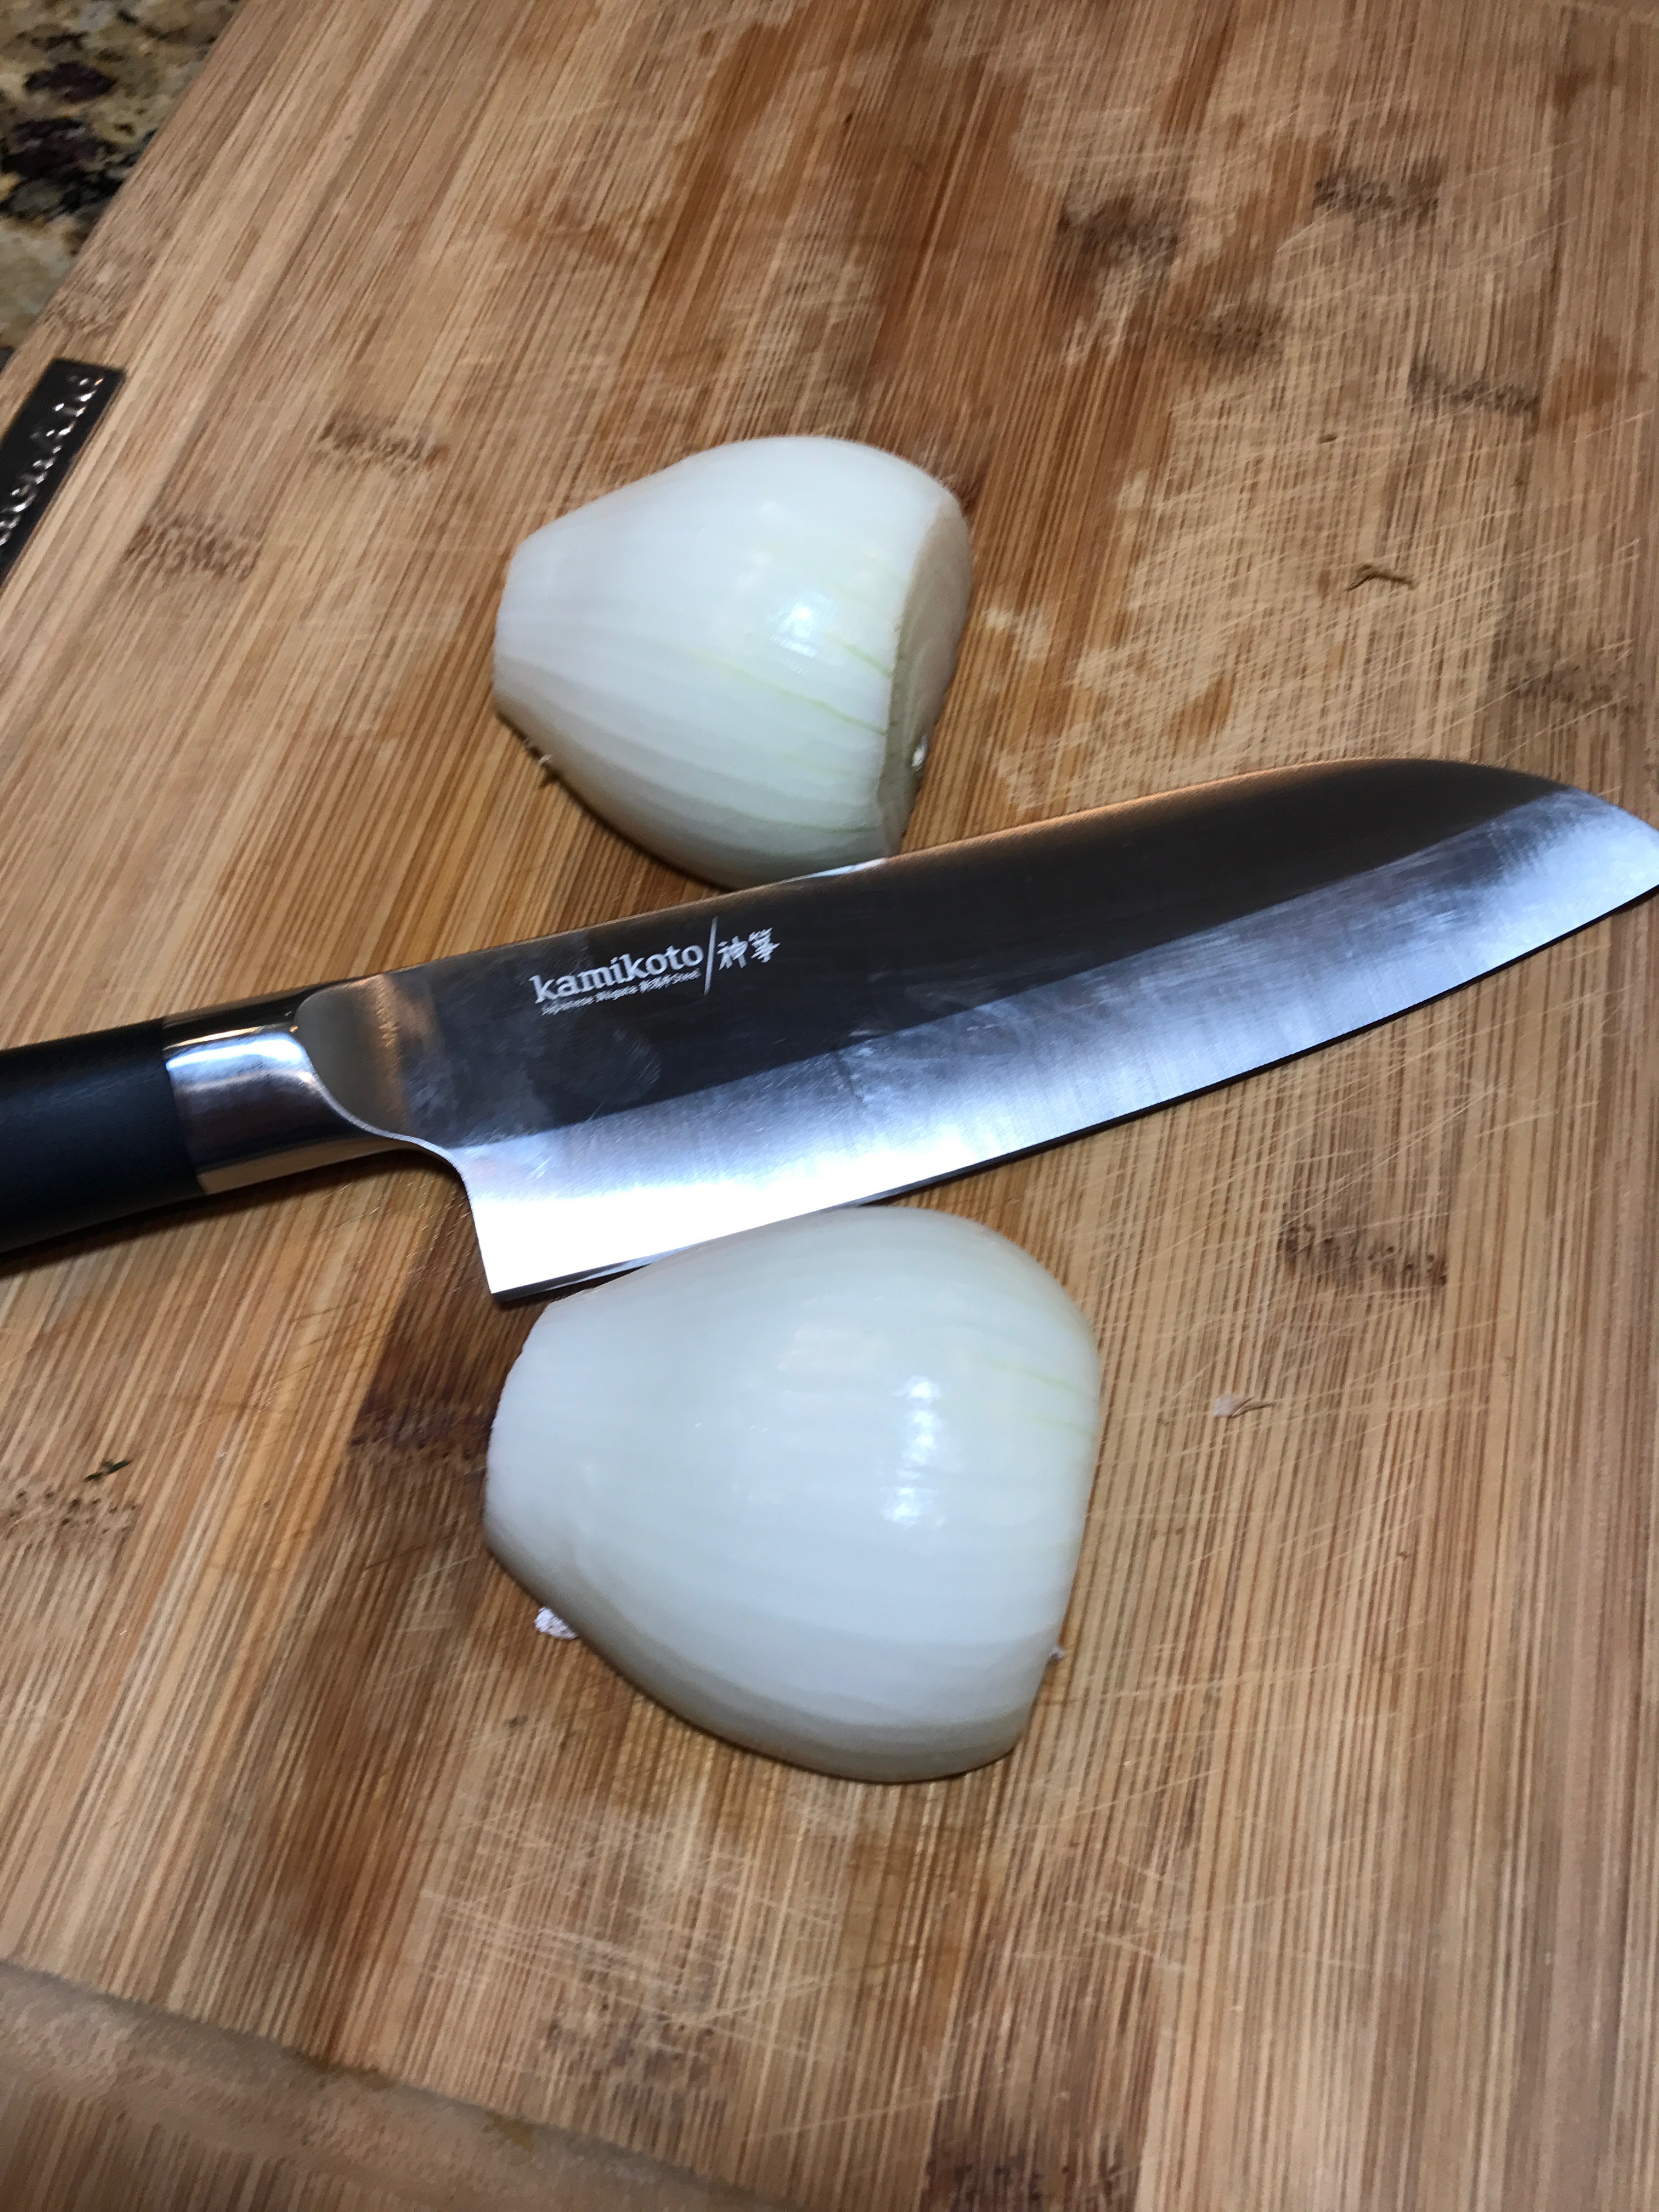  Kamikoto 7in. Santoku Chef Knife: Home & Kitchen